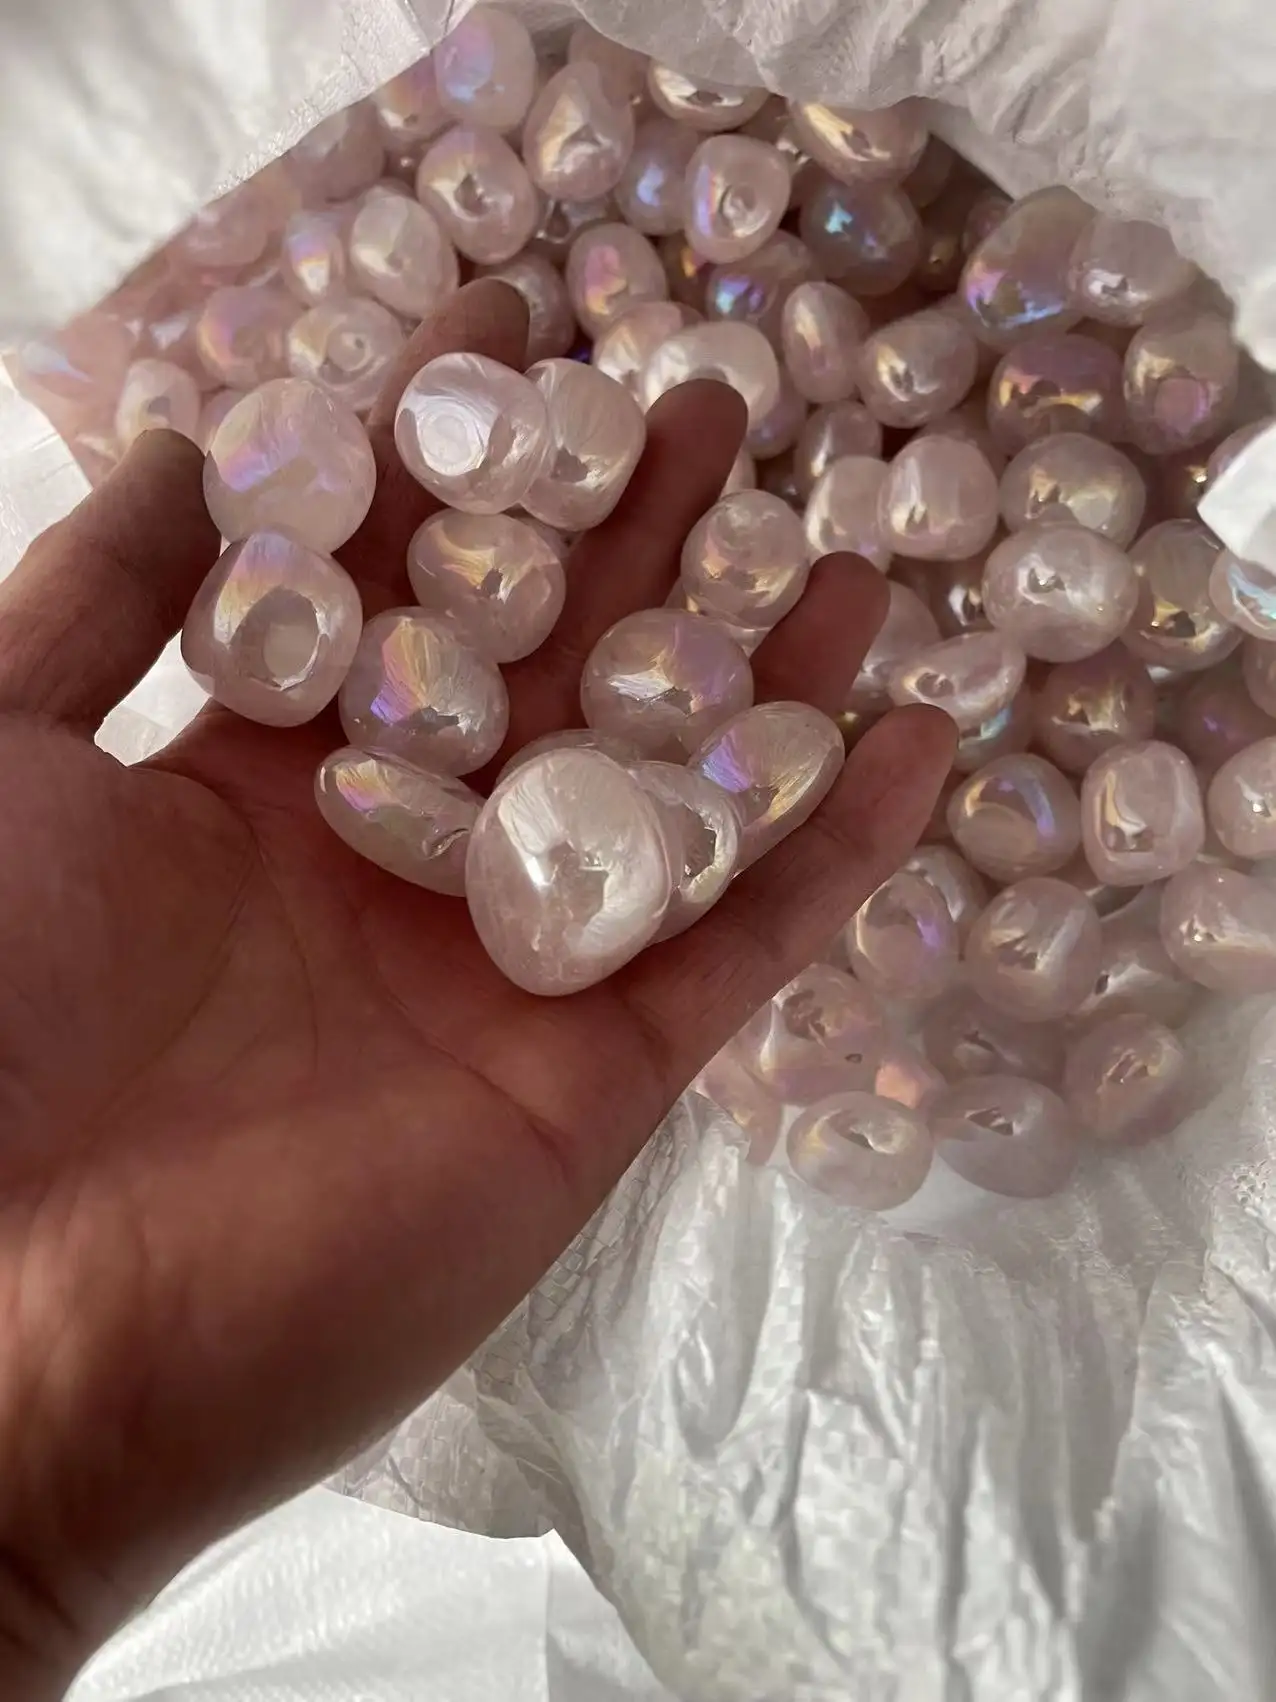 Wholesale natural quartz polished donghai crystals healing stones aura rose quartz bulk tumbled stones